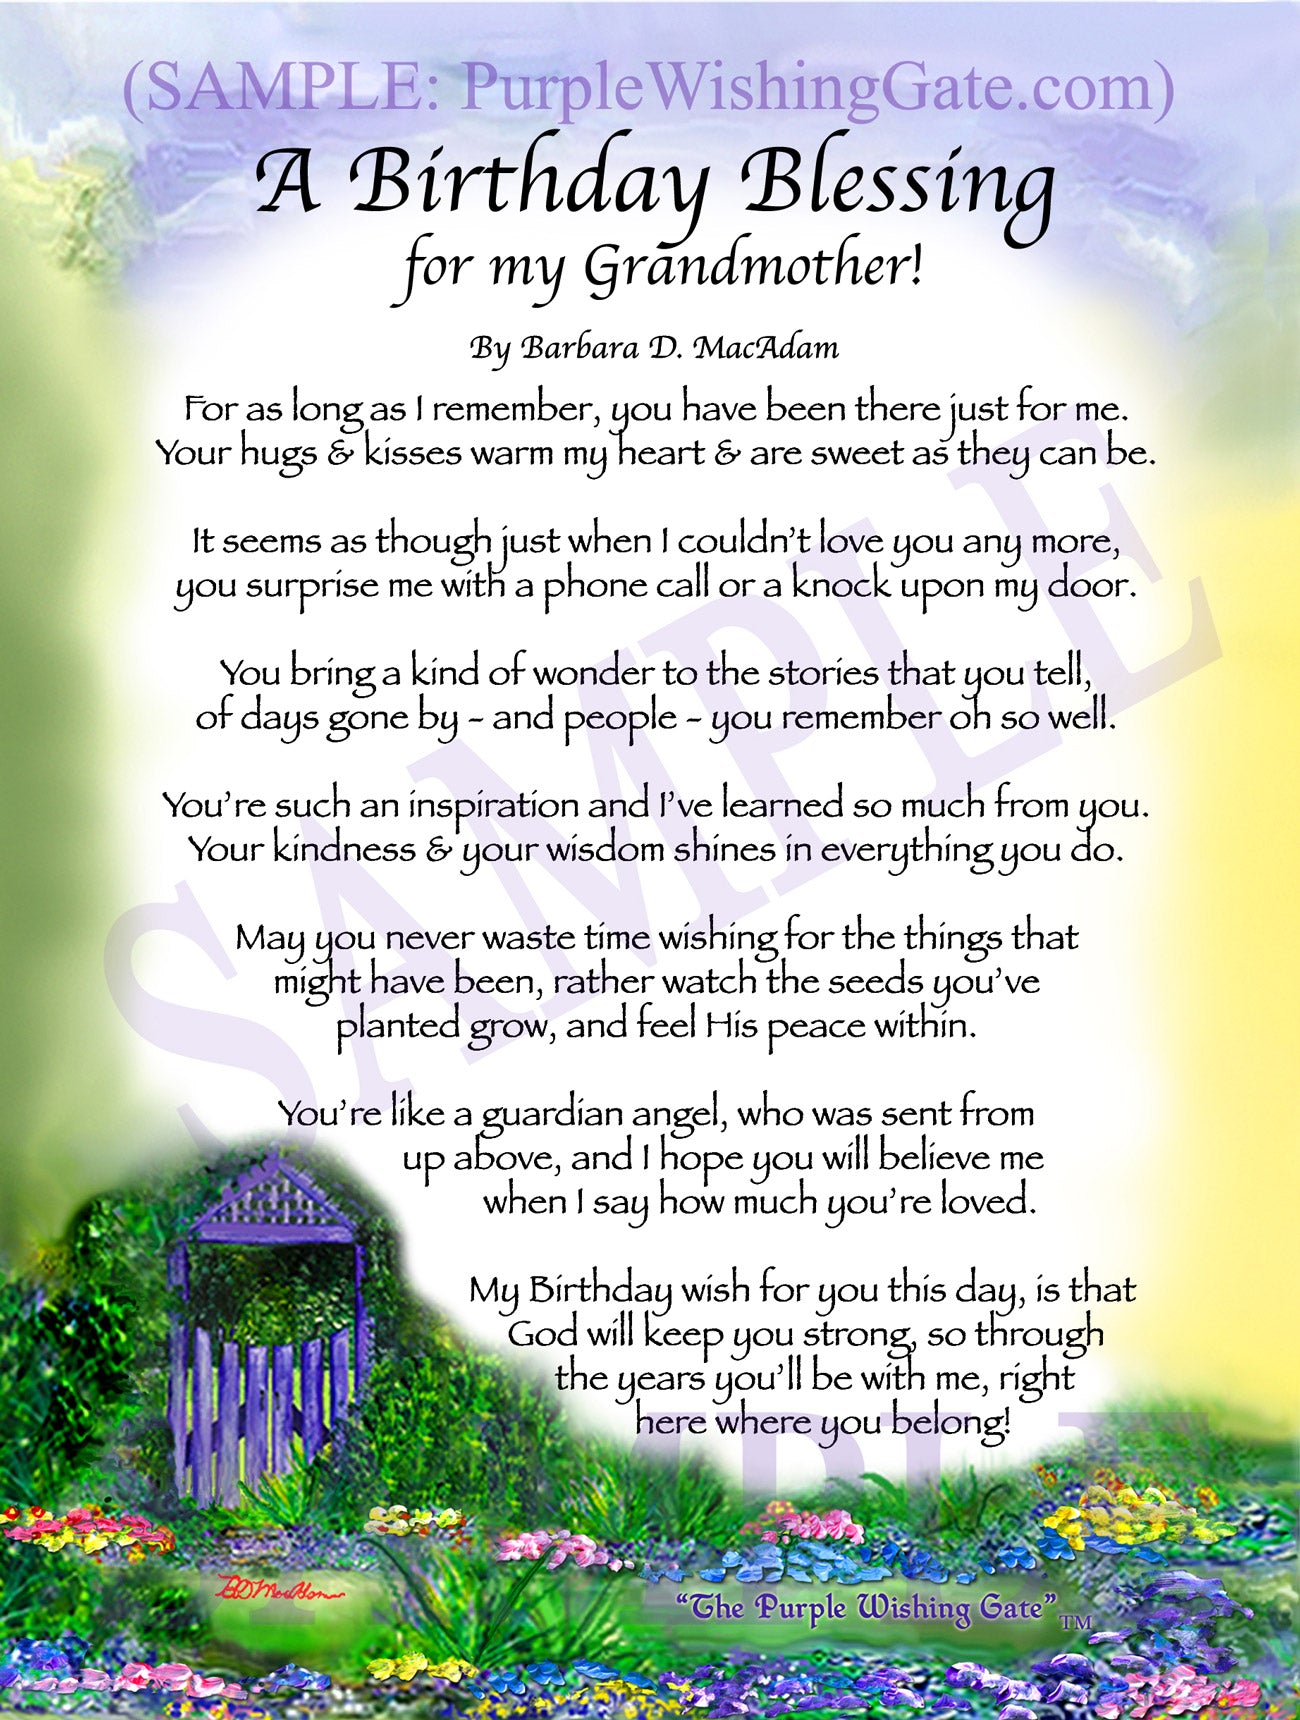 
              
        		A Birthday Blessing for my Grandmother! - Birthday Gift - PurpleWishingGate.com
        		
        	